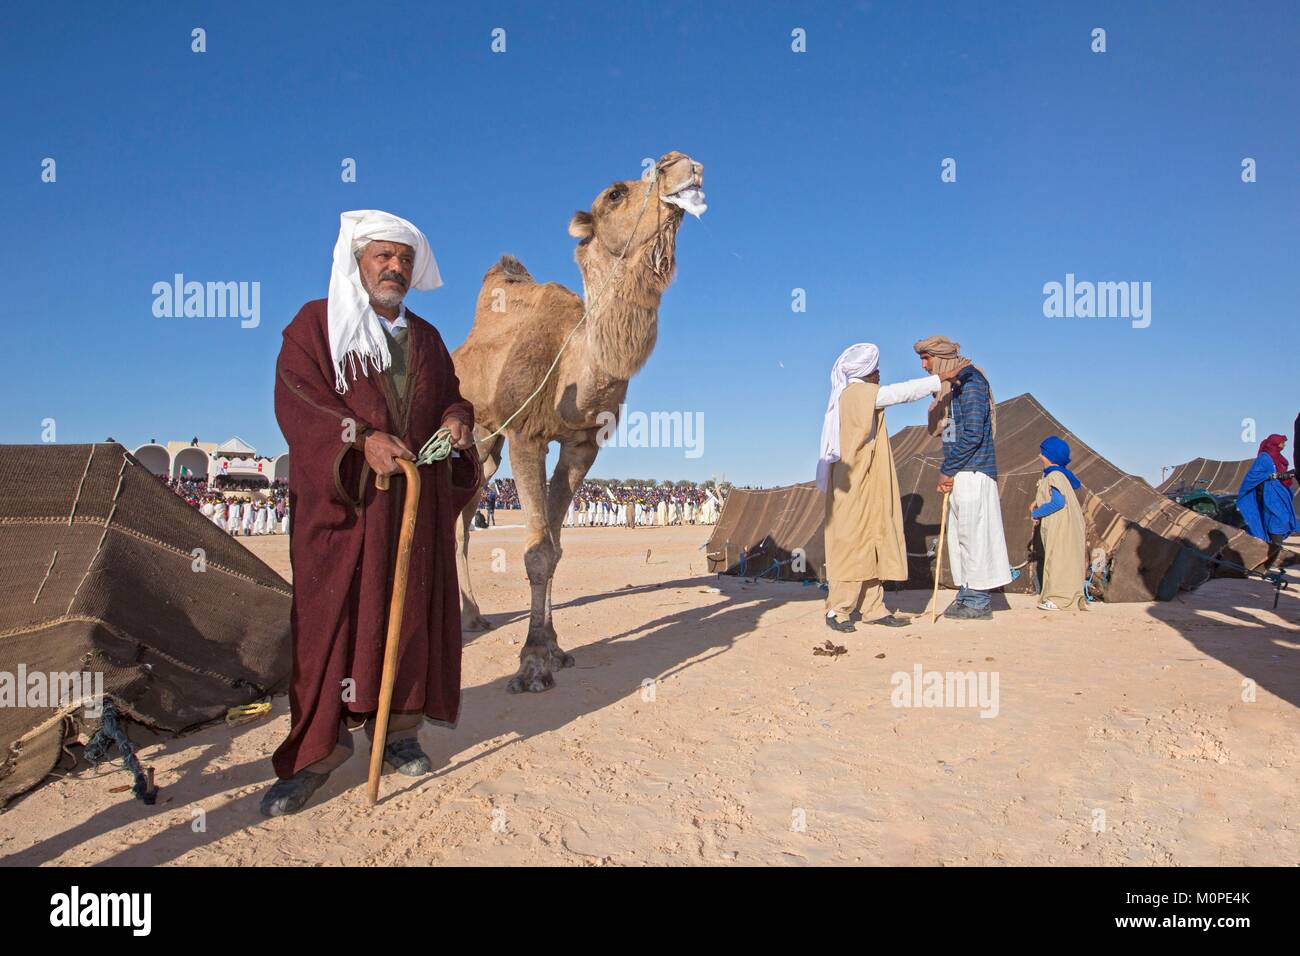 Tunisia,Douz,Sahara,international festival of the Sahara in Douz,Bedouin and Nomadic tents with dromedary Stock Photo